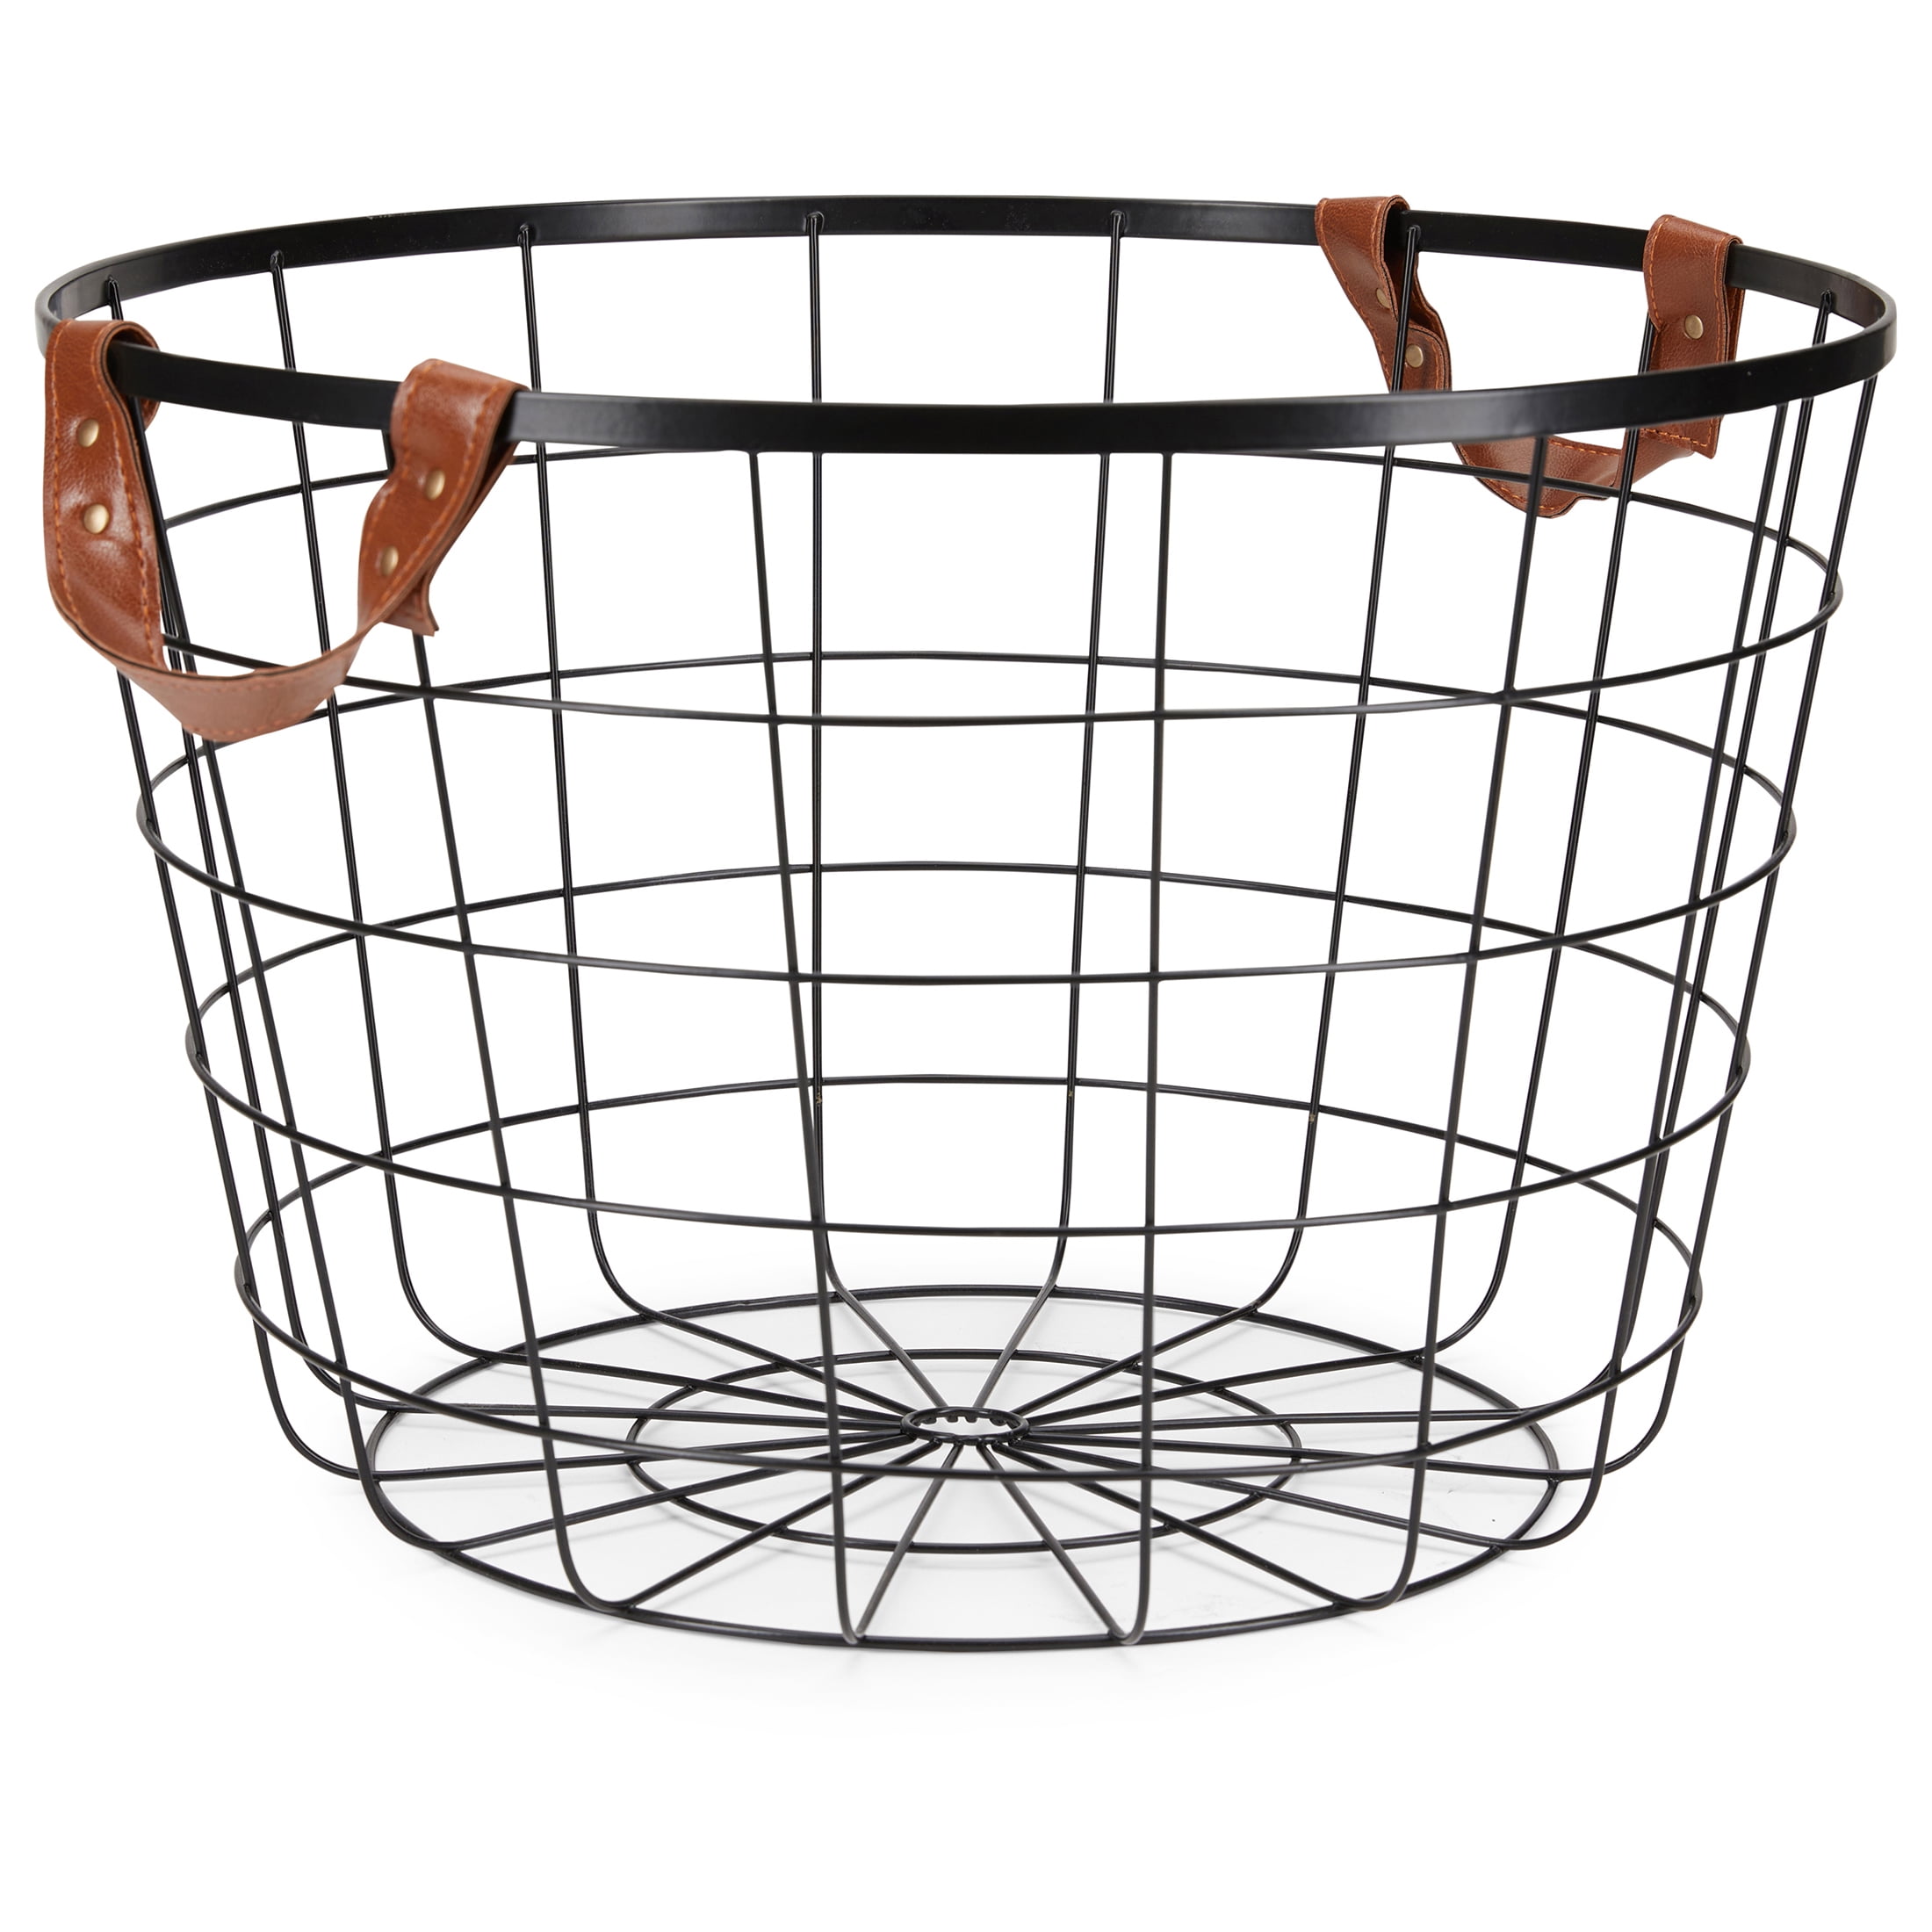 Leather Round Storage Basket  Round leather, Next day delivery gifts,  Storage baskets